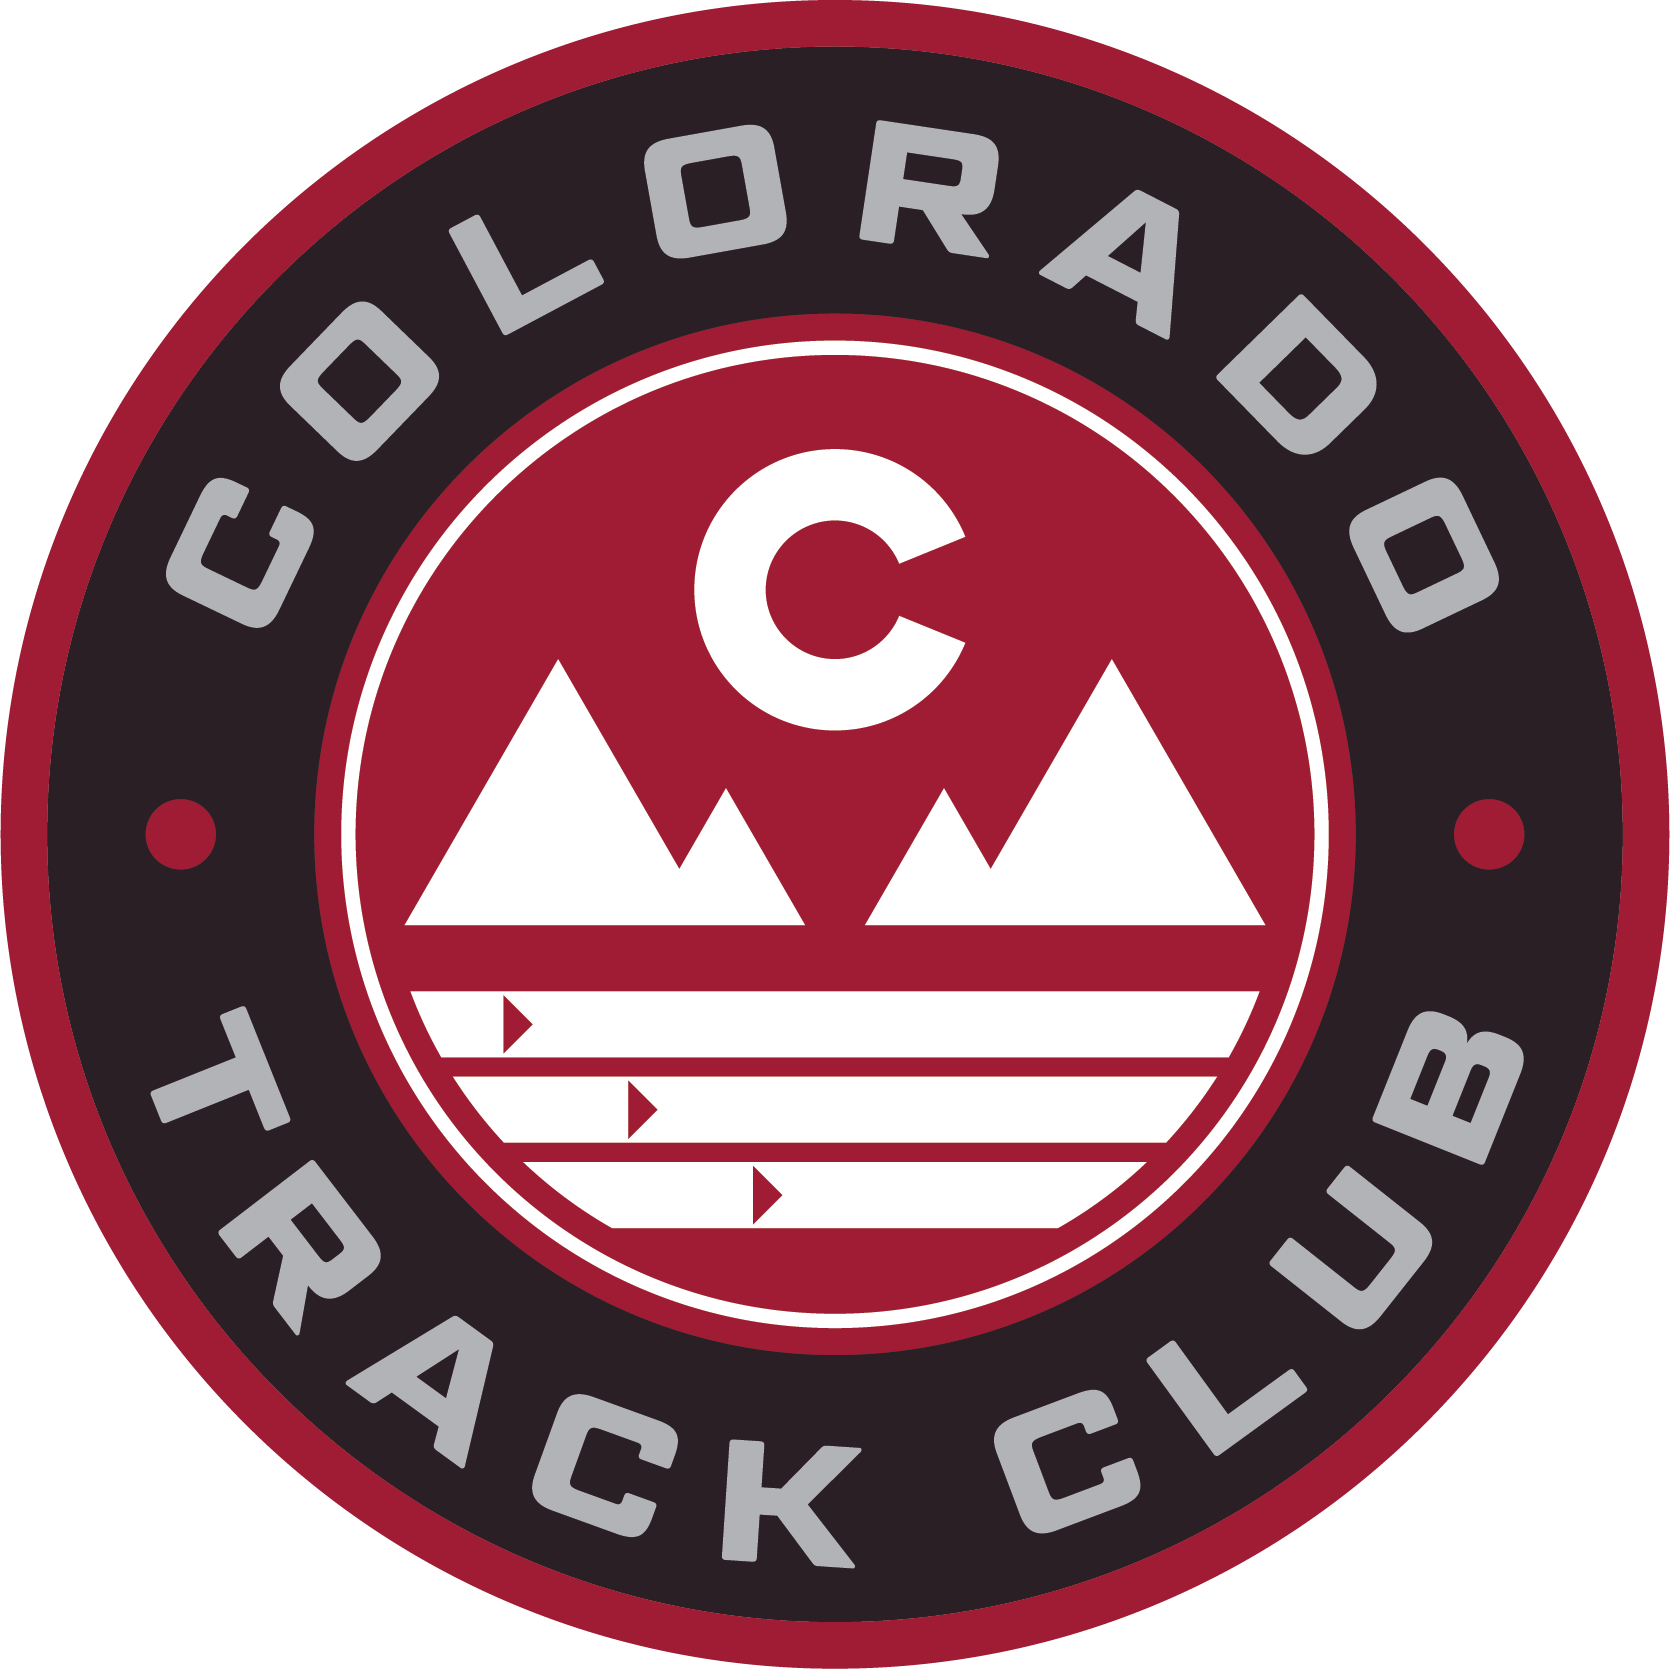 800 Meter Training Plans Colorado